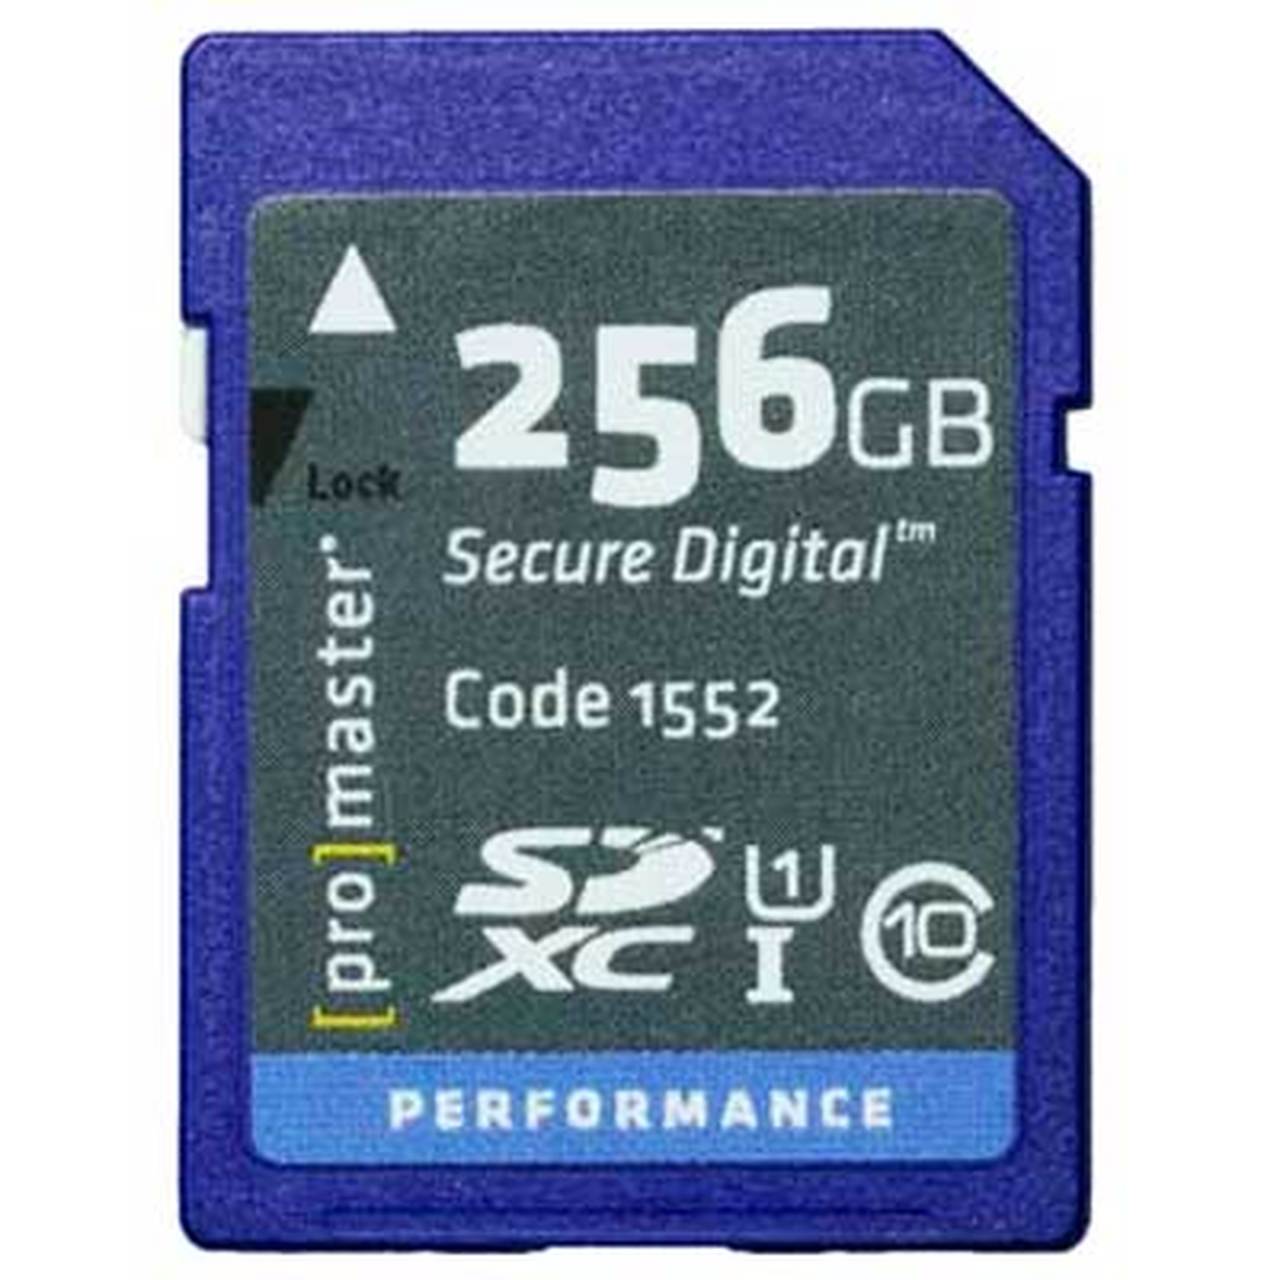 Promaster 1552  256GB  SDXC Performance Class 10 - Secure Digital Memory Card 1552